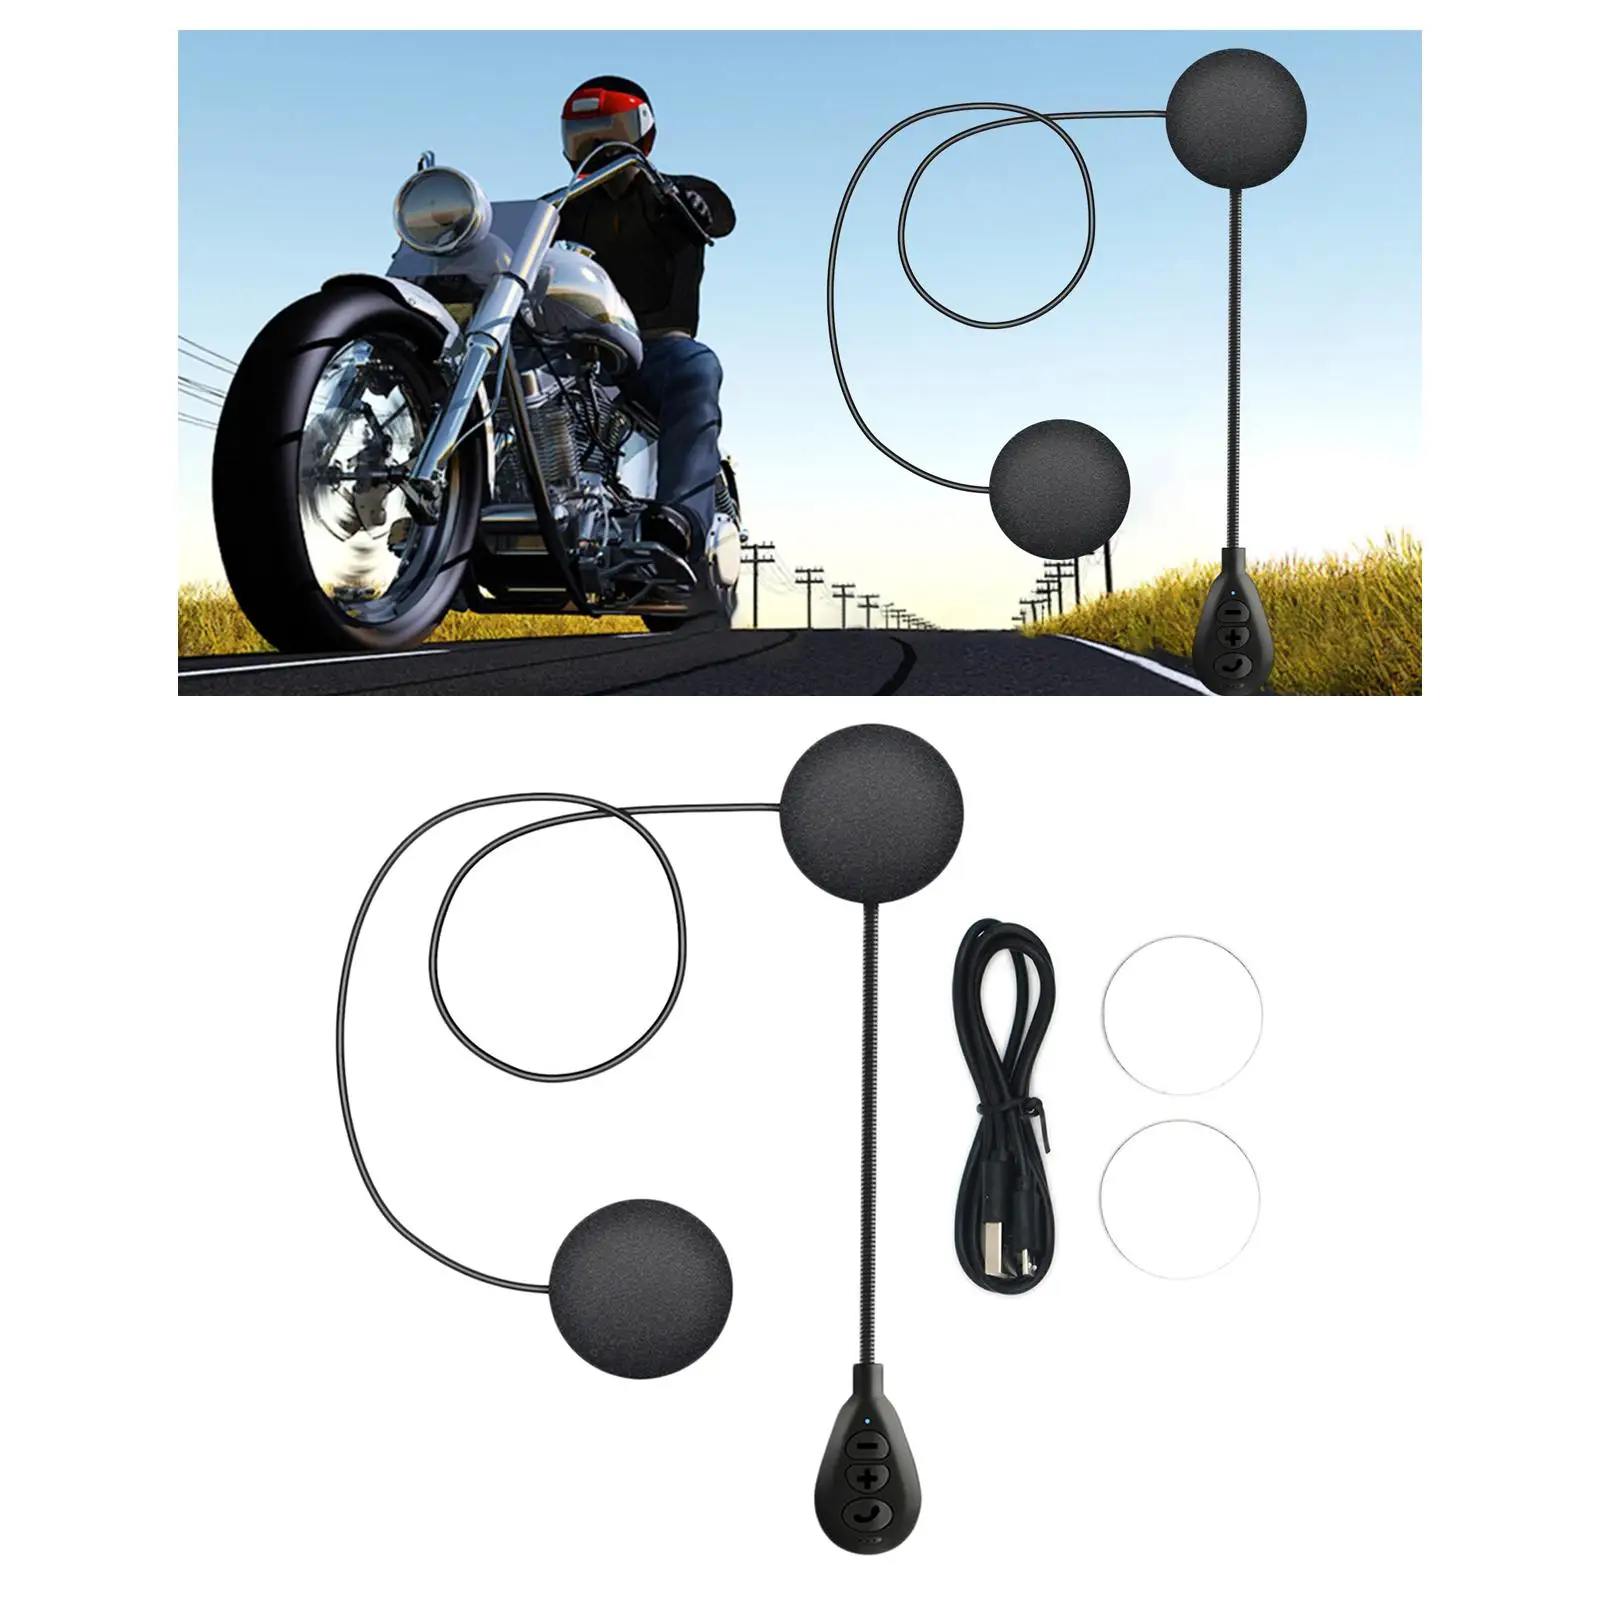 Motorcycle Bluetooth Helmet Headset Stereo Headphone   Outdoor Sports